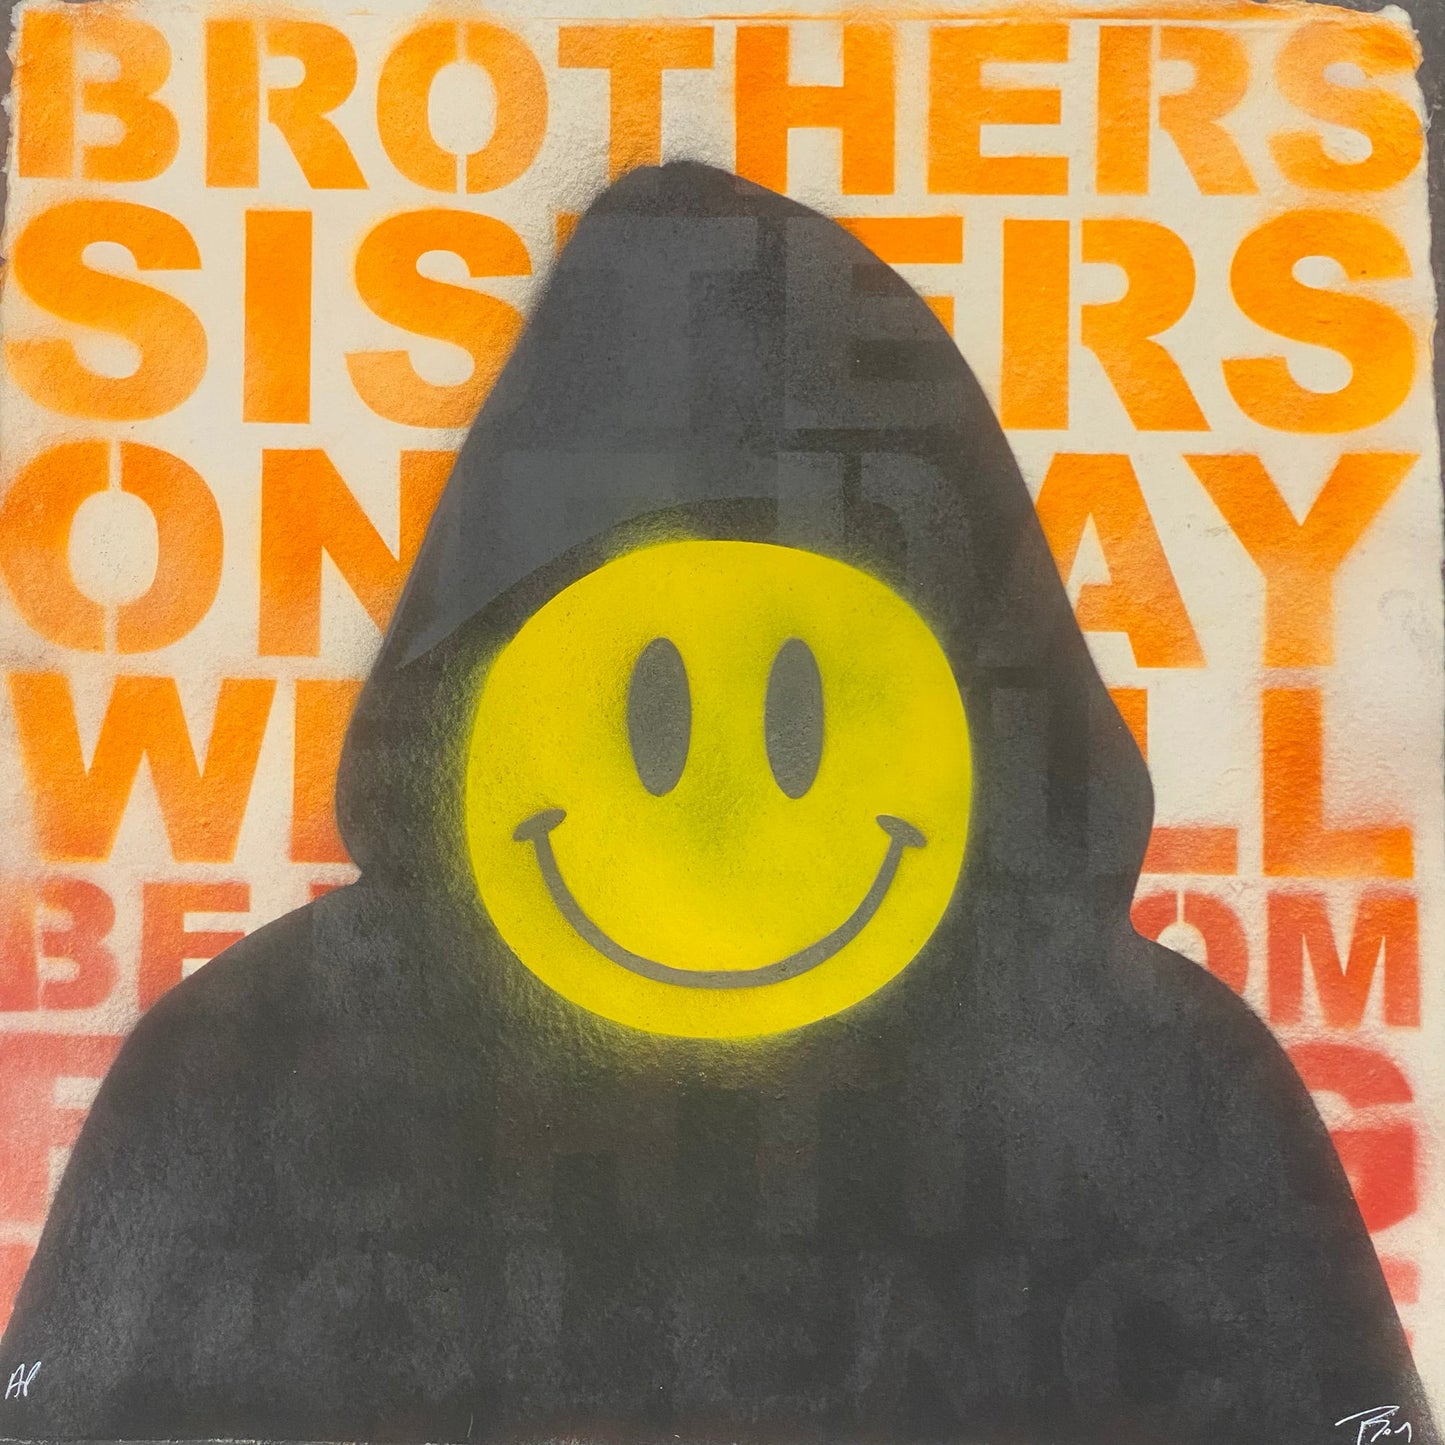 Brothers Sisters artist proof onto pressed paper orange edition - Smolensky Gallery